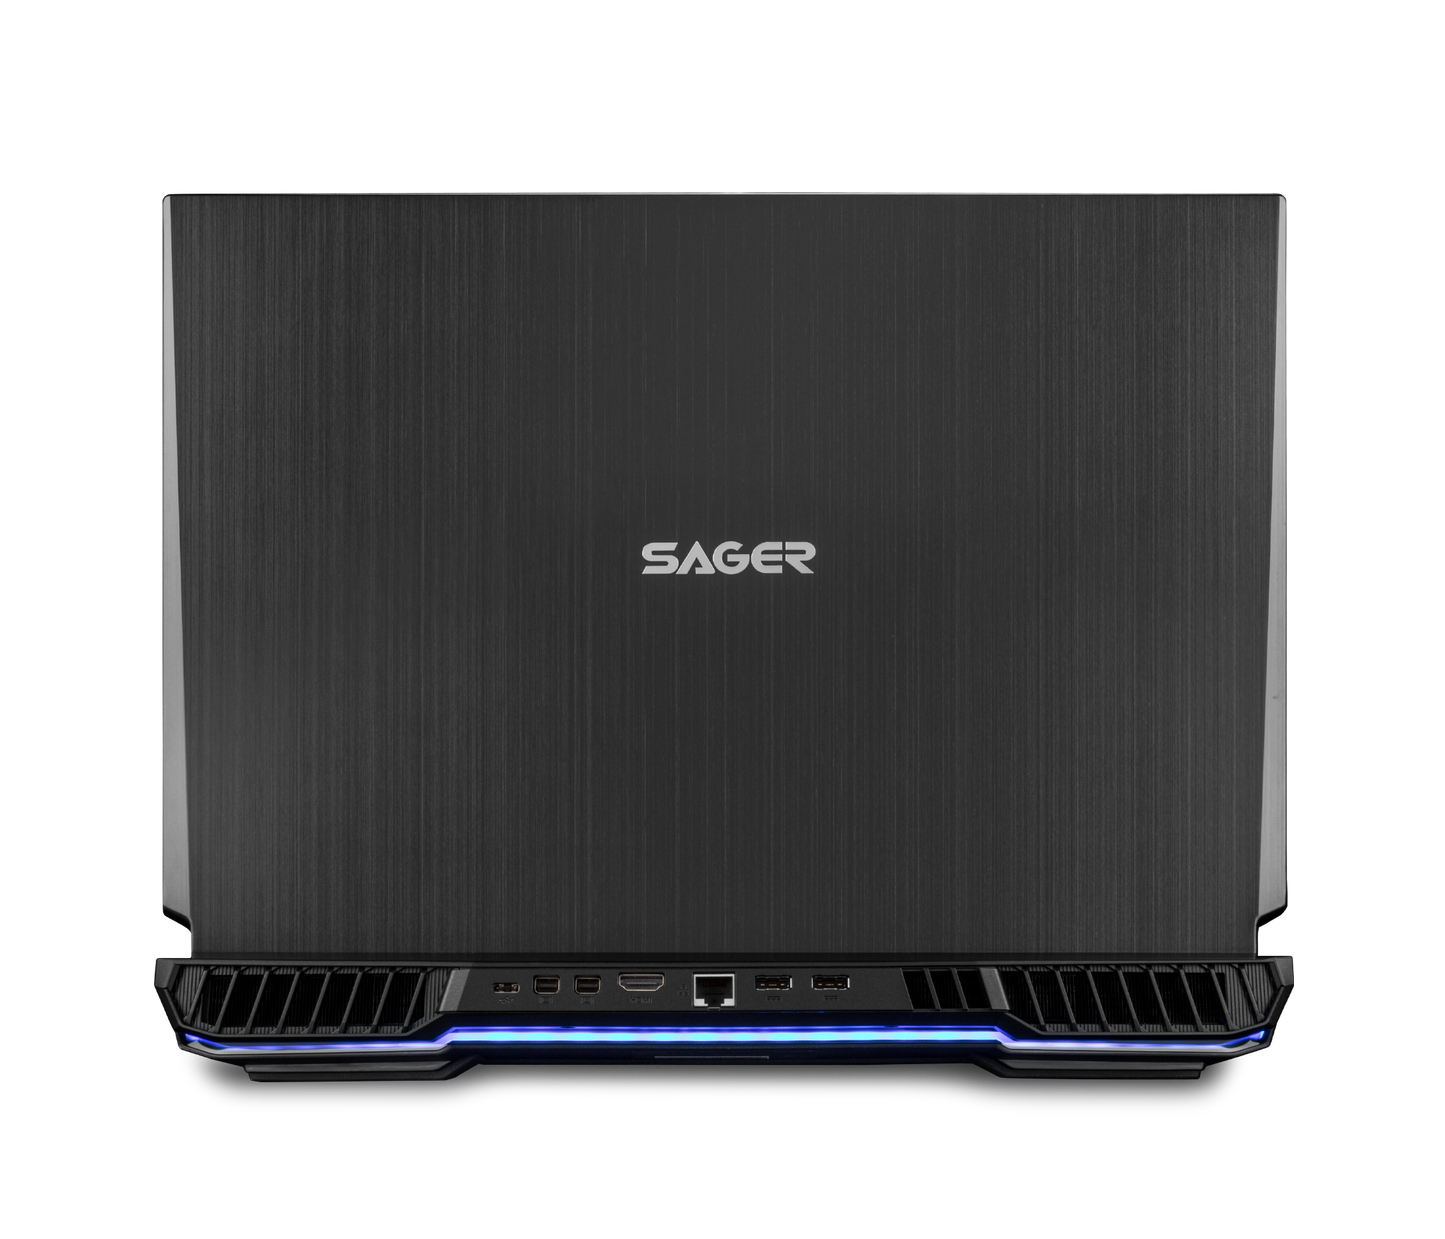 SAGER NP9672M-G1 (CLEVO X170KM-G) Gaming Laptop